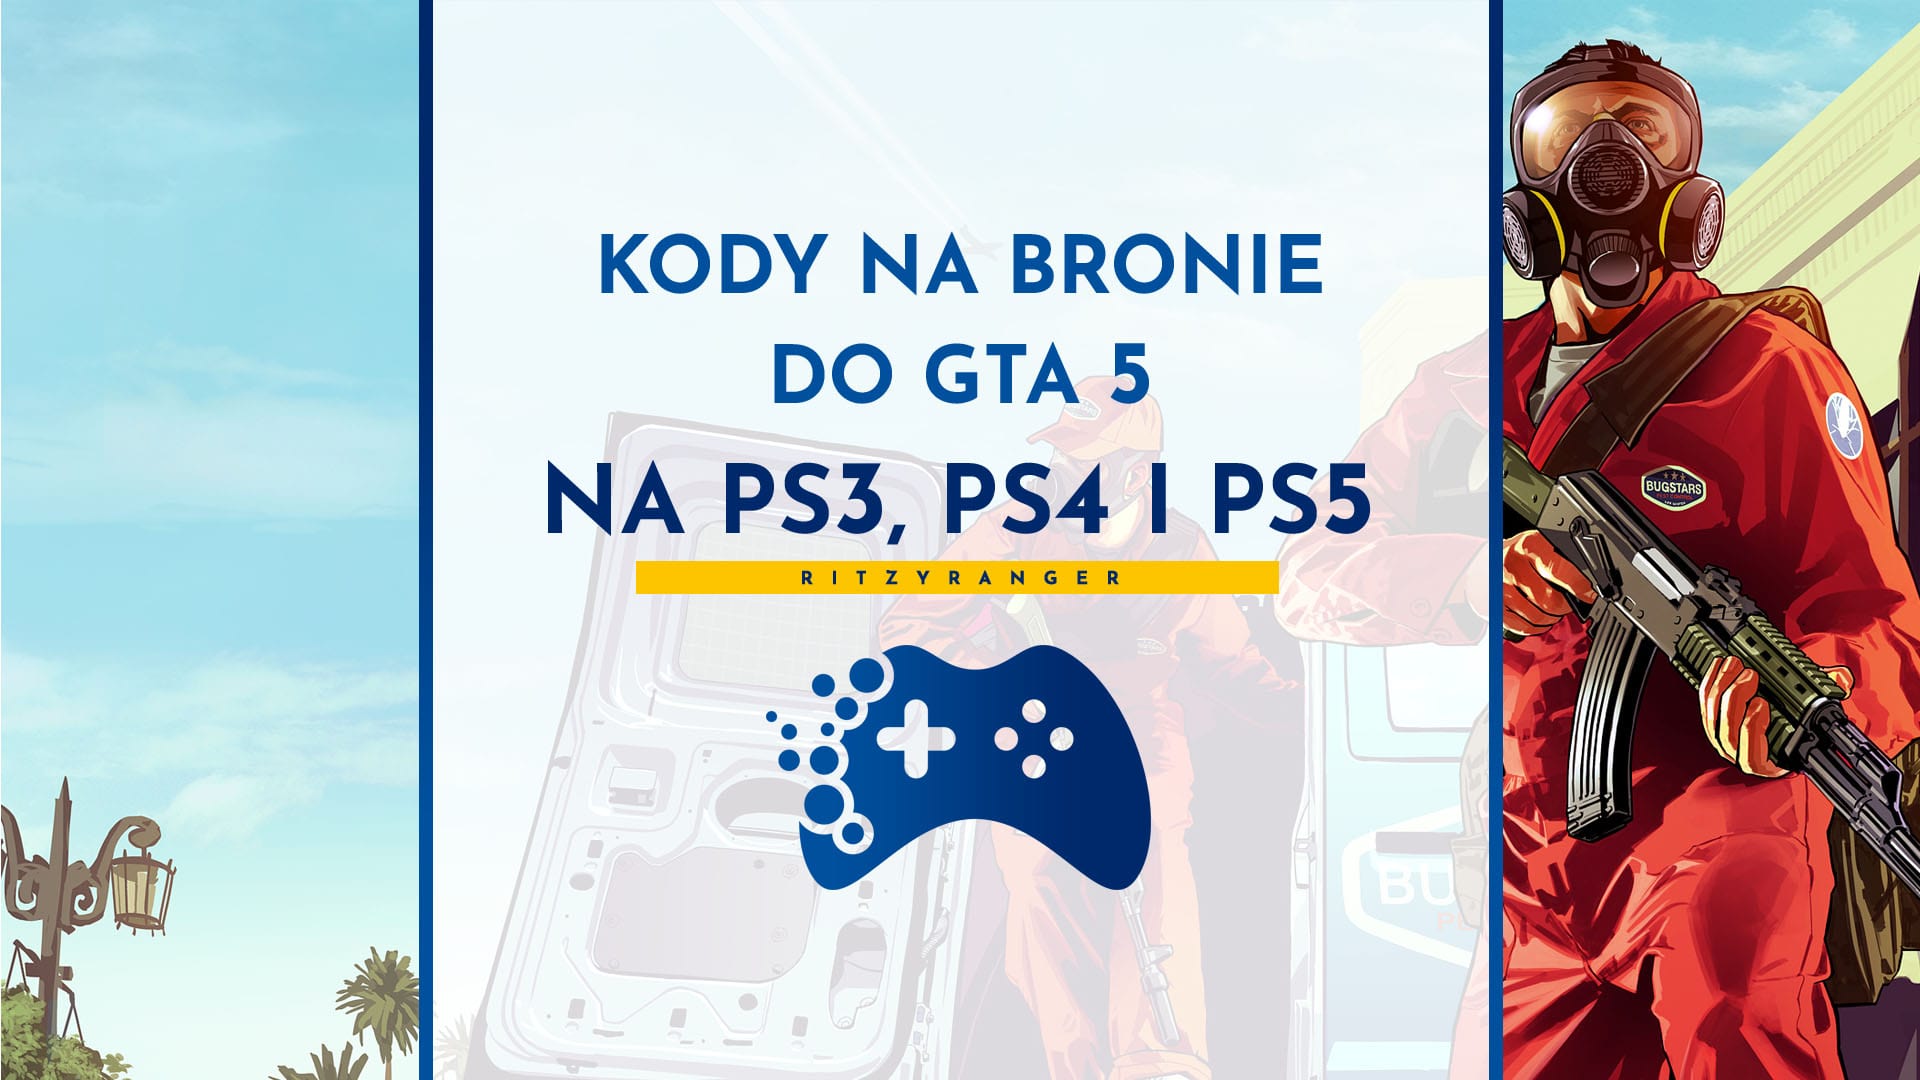 Kody na bronie do GTA 5 na PS3, PS4 i PS5 Portal dla